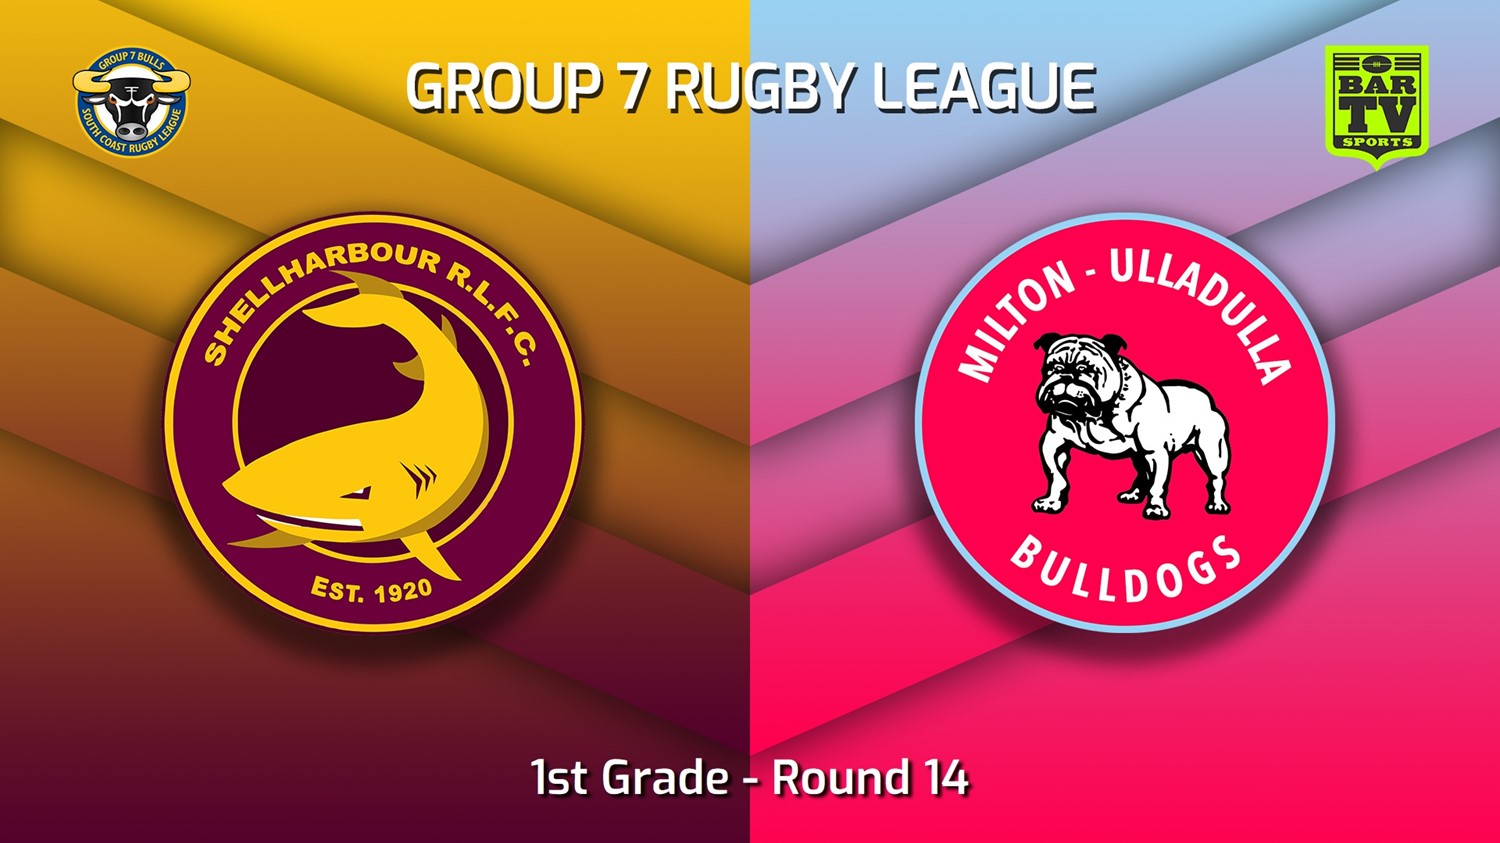 220724-South Coast Round 14 - 1st Grade - Shellharbour Sharks v Milton-Ulladulla Bulldogs Minigame Slate Image